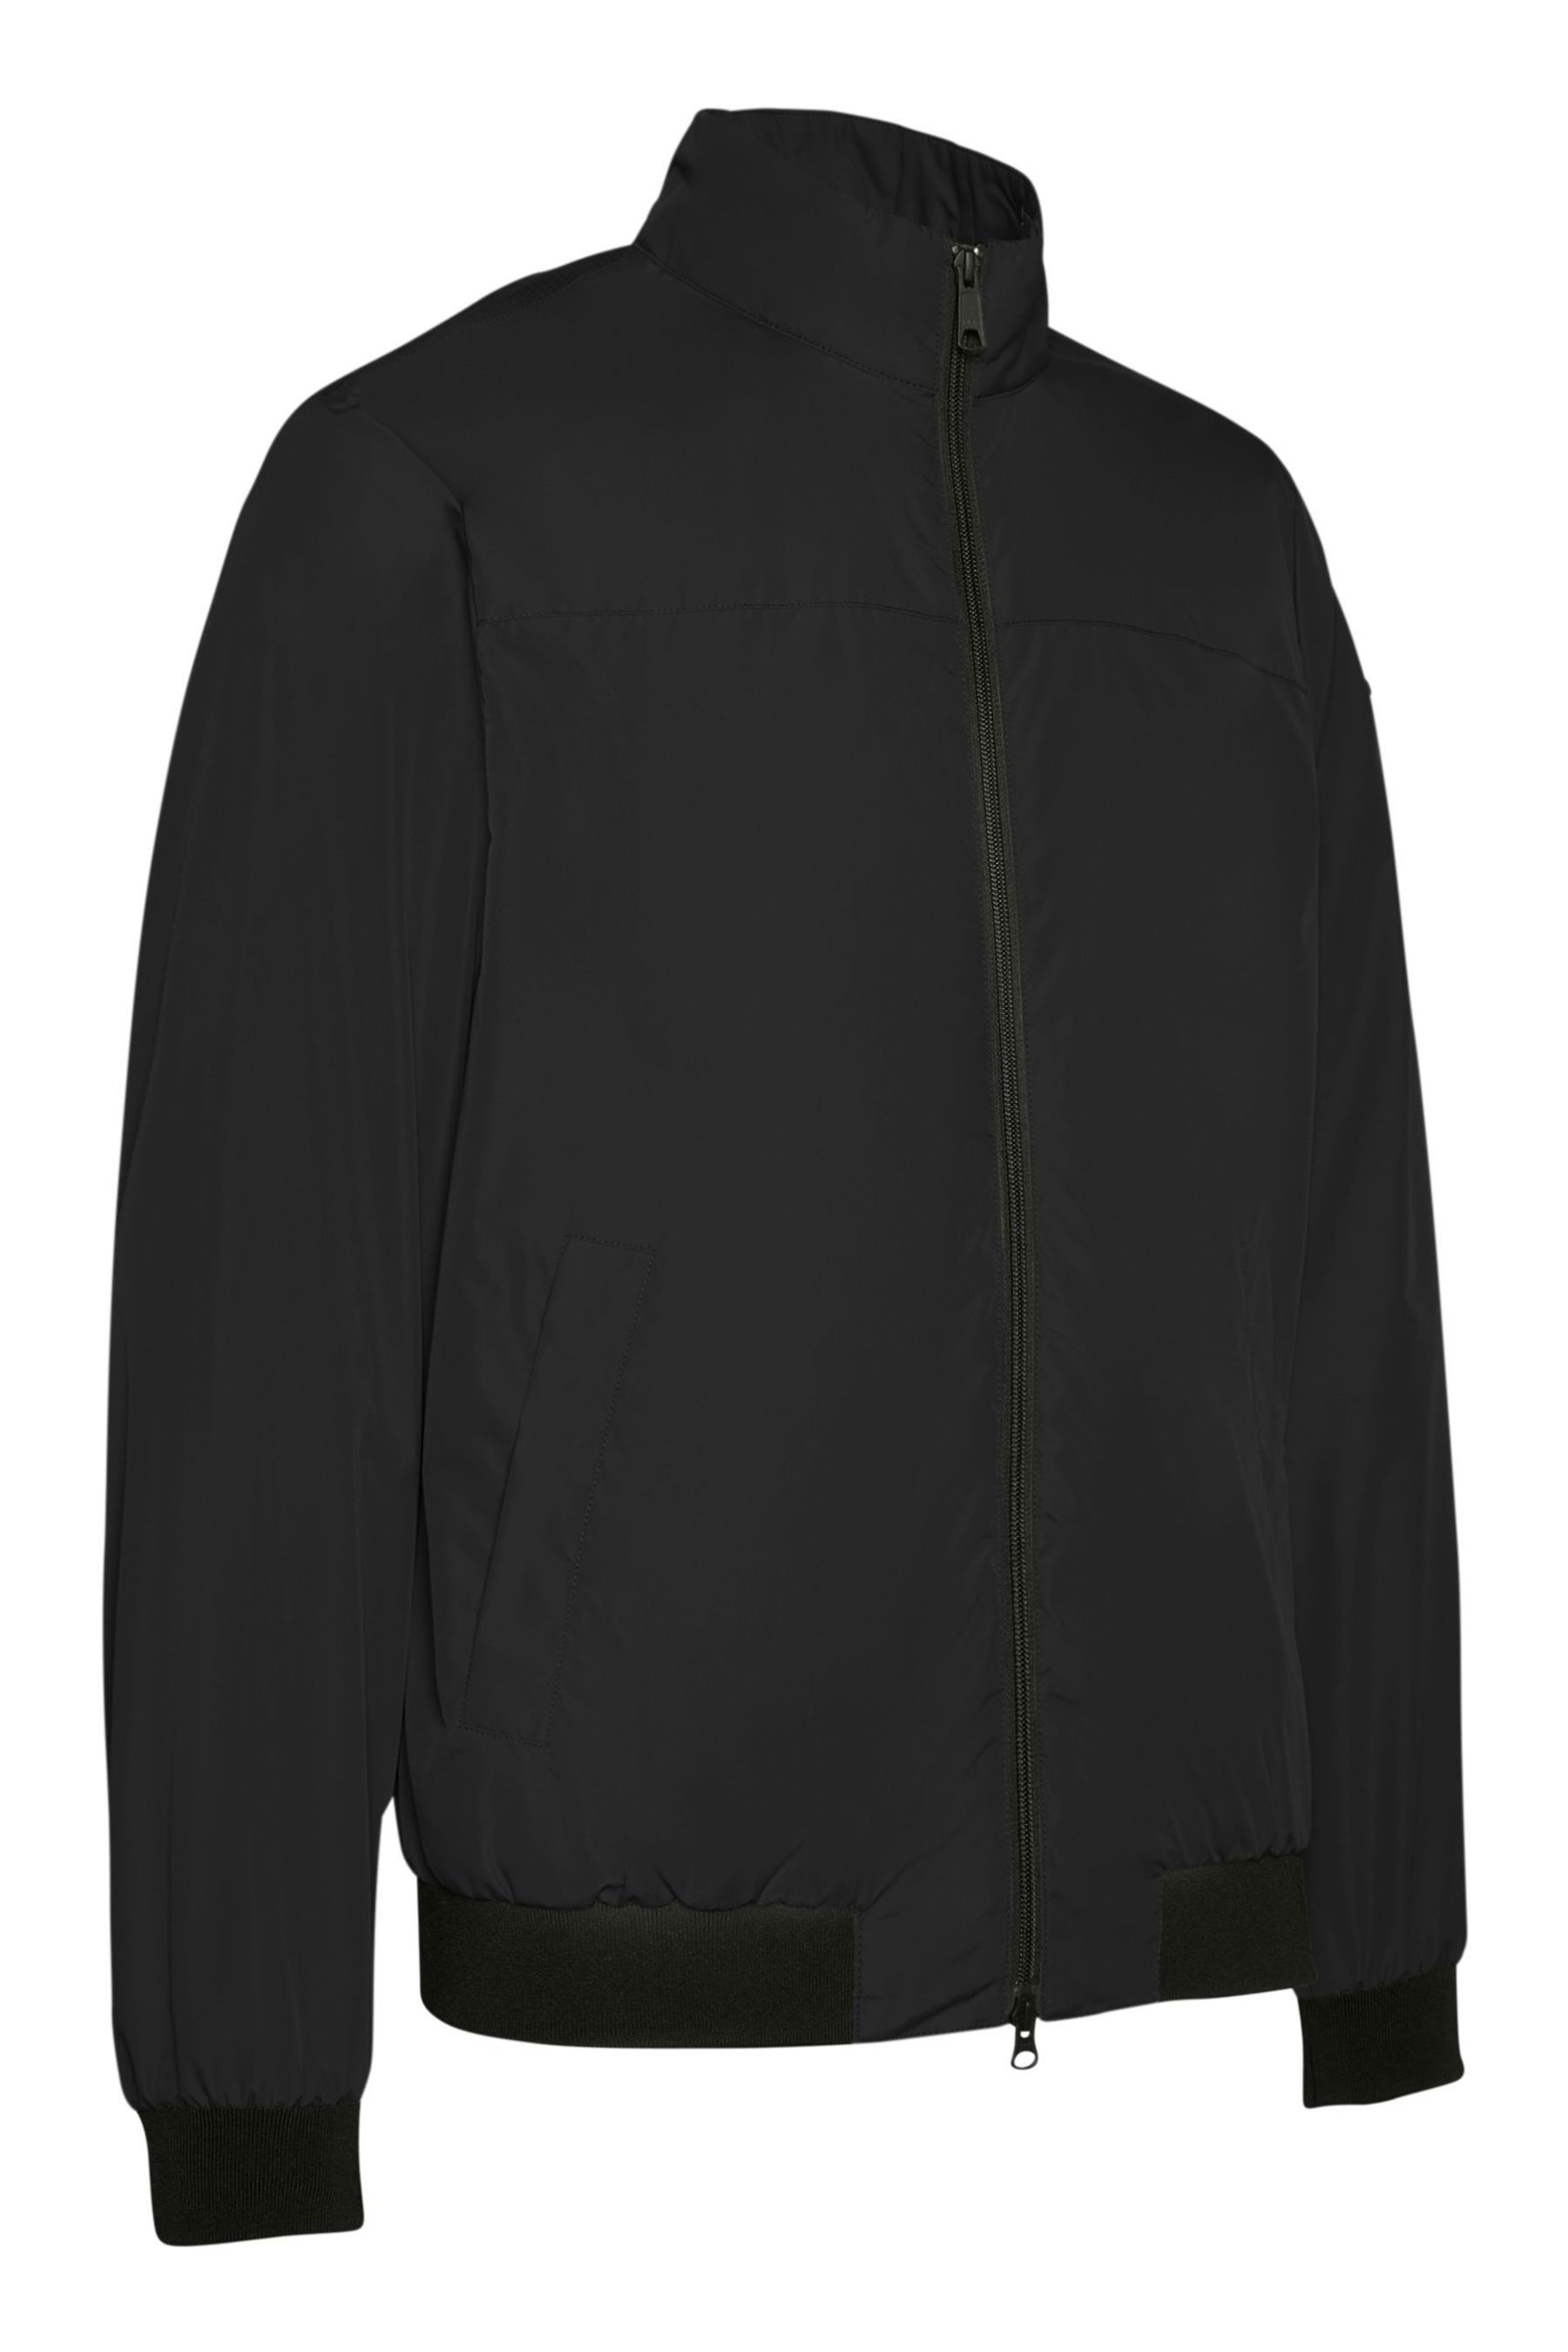 Buy Geox Mens Jharrod Black Bomber Jacket from the Next UK online shop